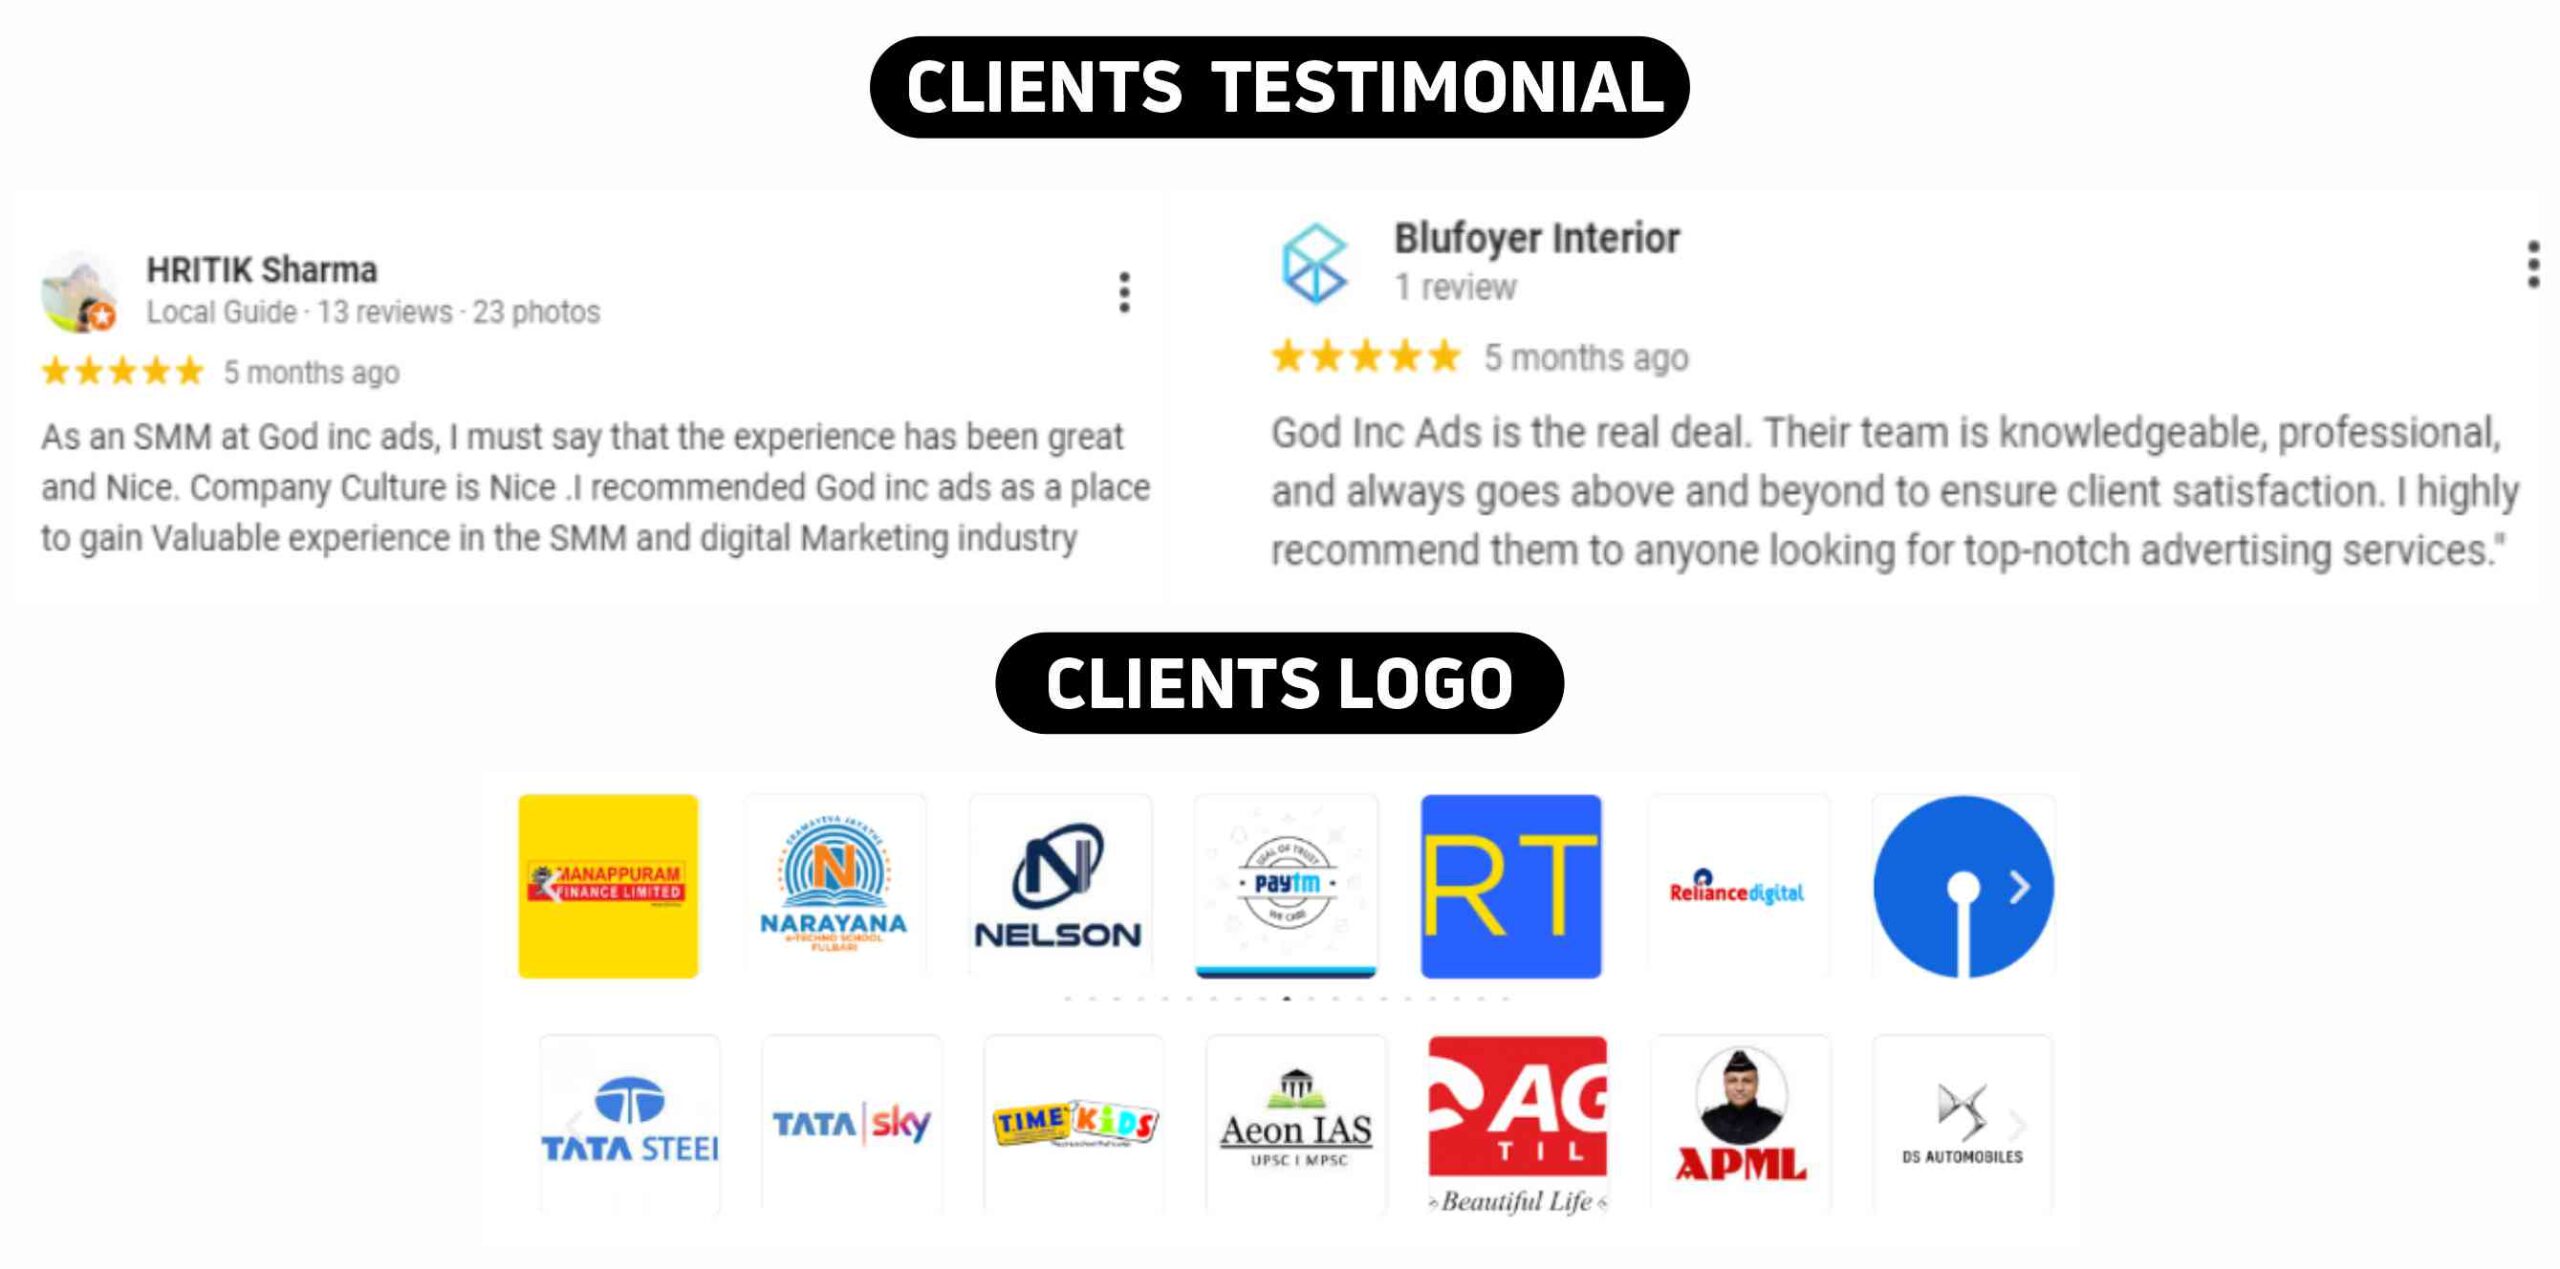 God Inc Ads Work Client Testimonial & Logos